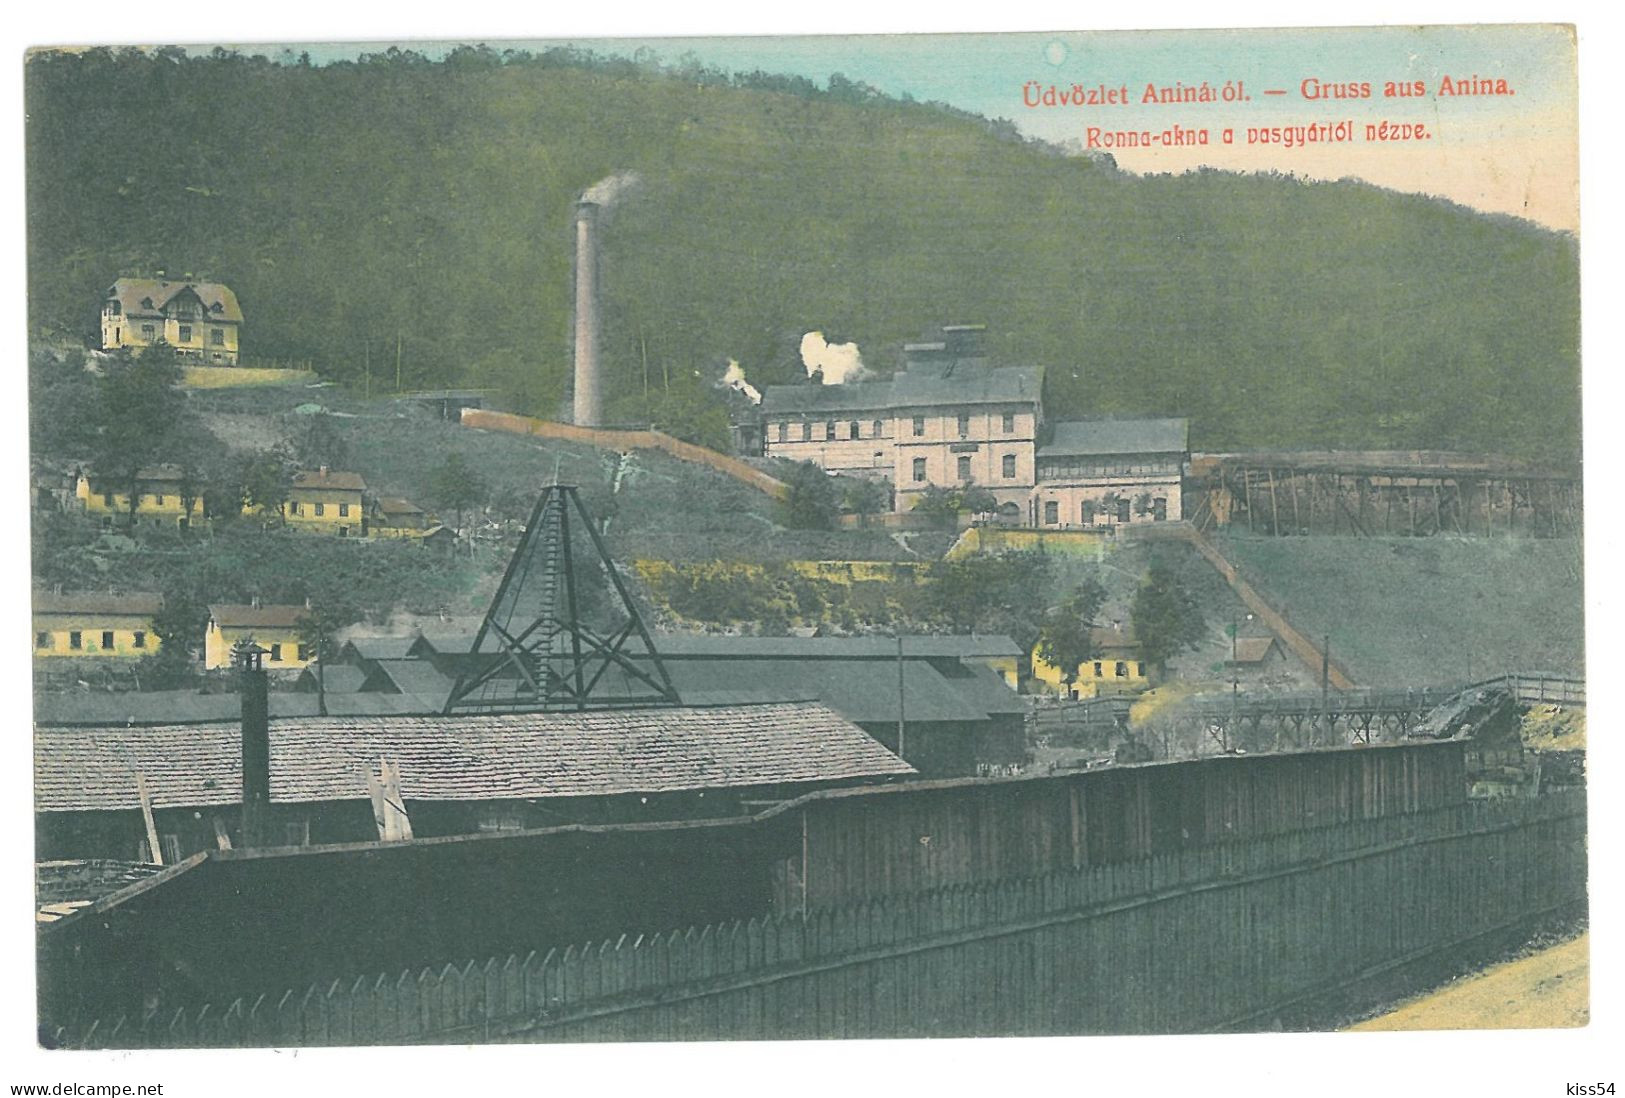 RO - 25402 ANINA, Caras Severin, Mining Industry, Romania - Old Postcard - Unused - Rumänien